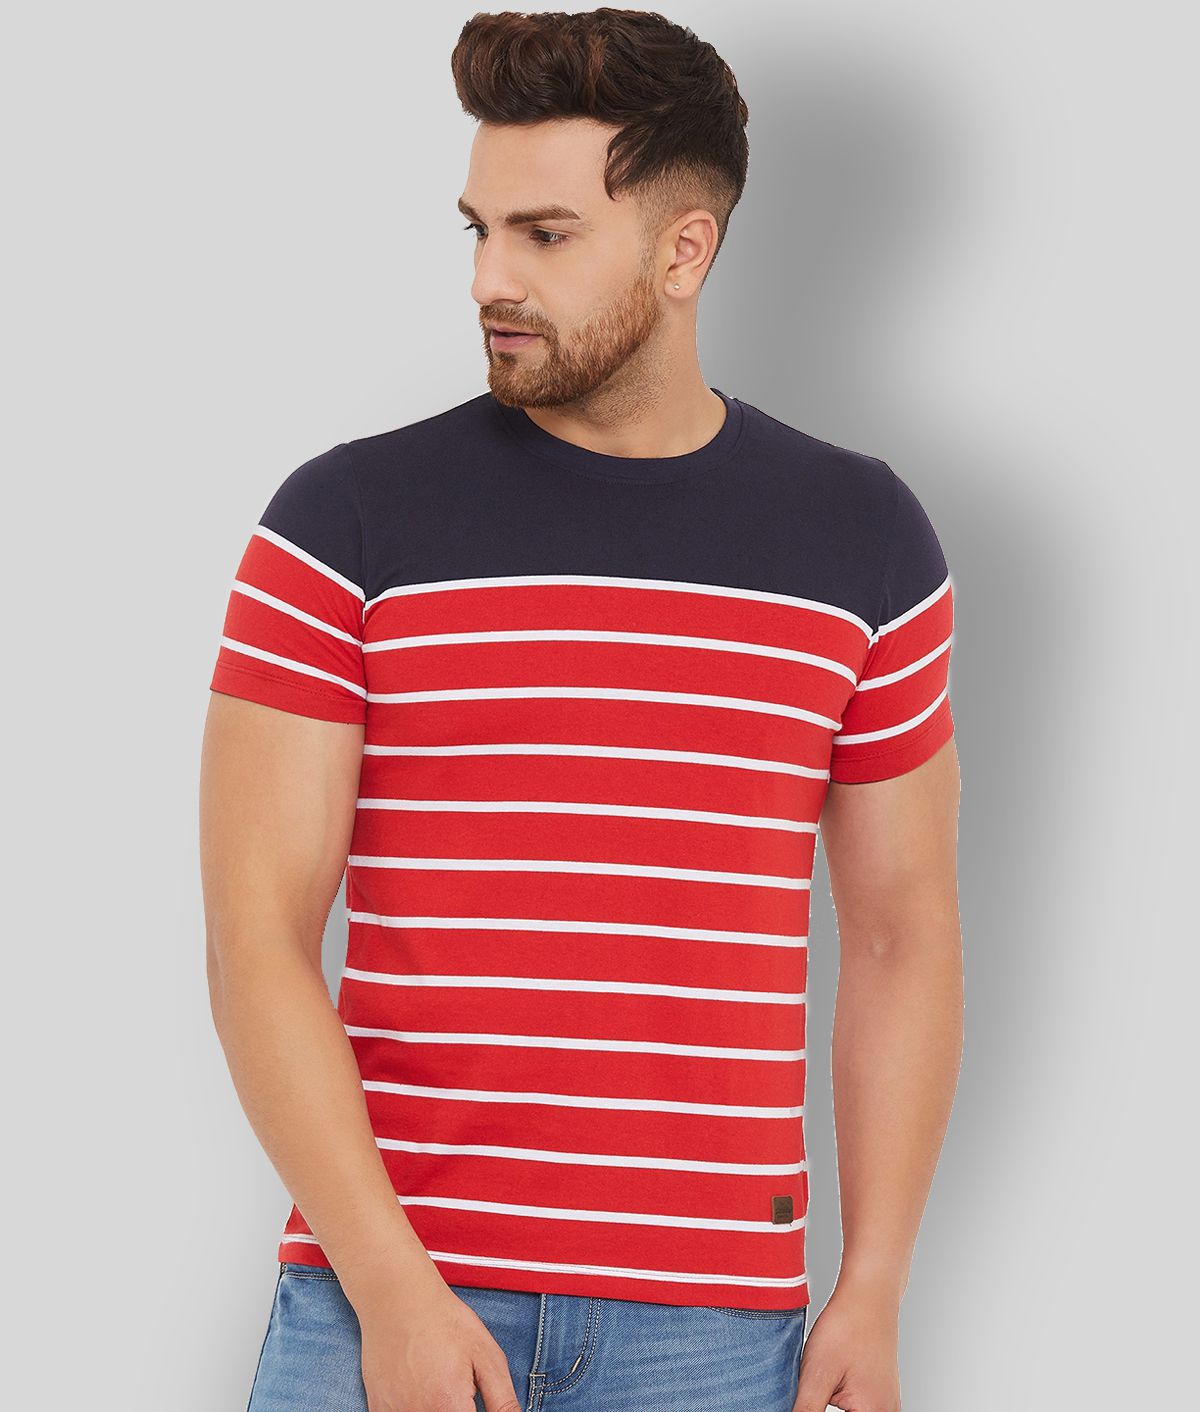 AUSTIN WOOD - Red Cotton Blend Regular Fit  Men's T-Shirt ( Pack of 1 )